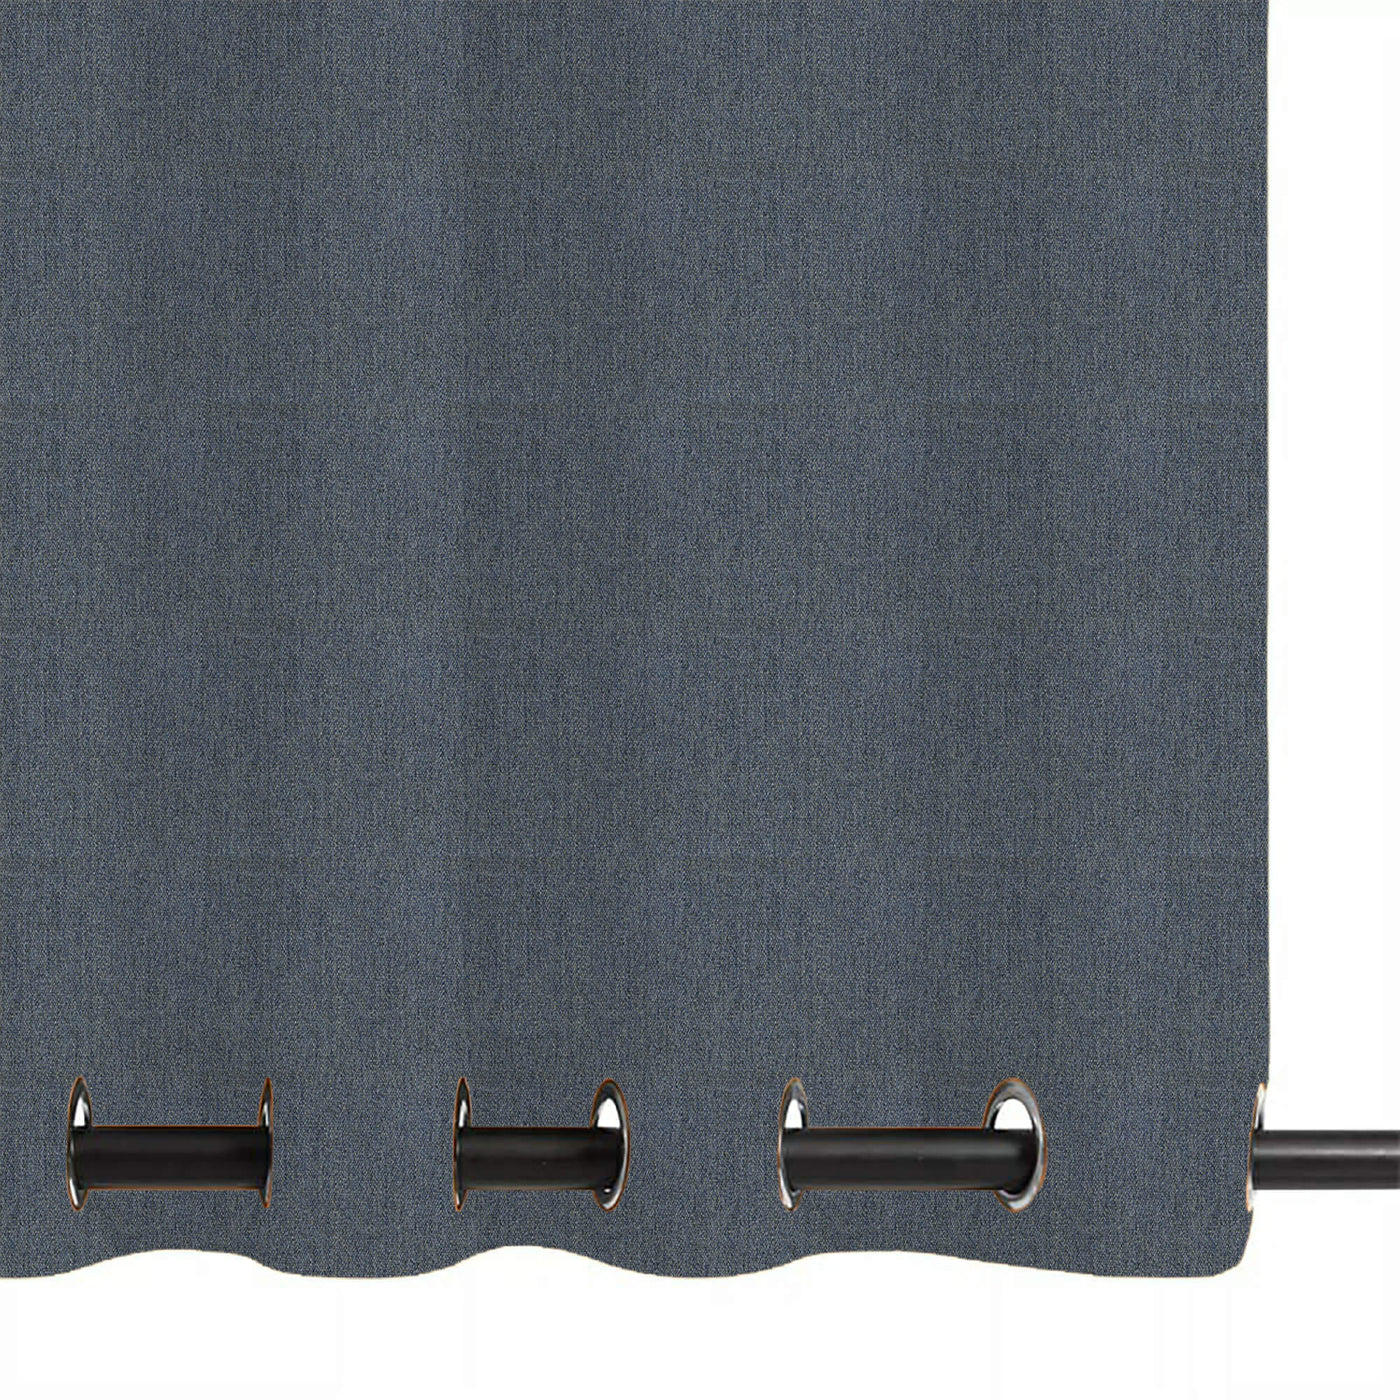 PENGI Outdoor Curtains Waterproof - Mix Steel Gray